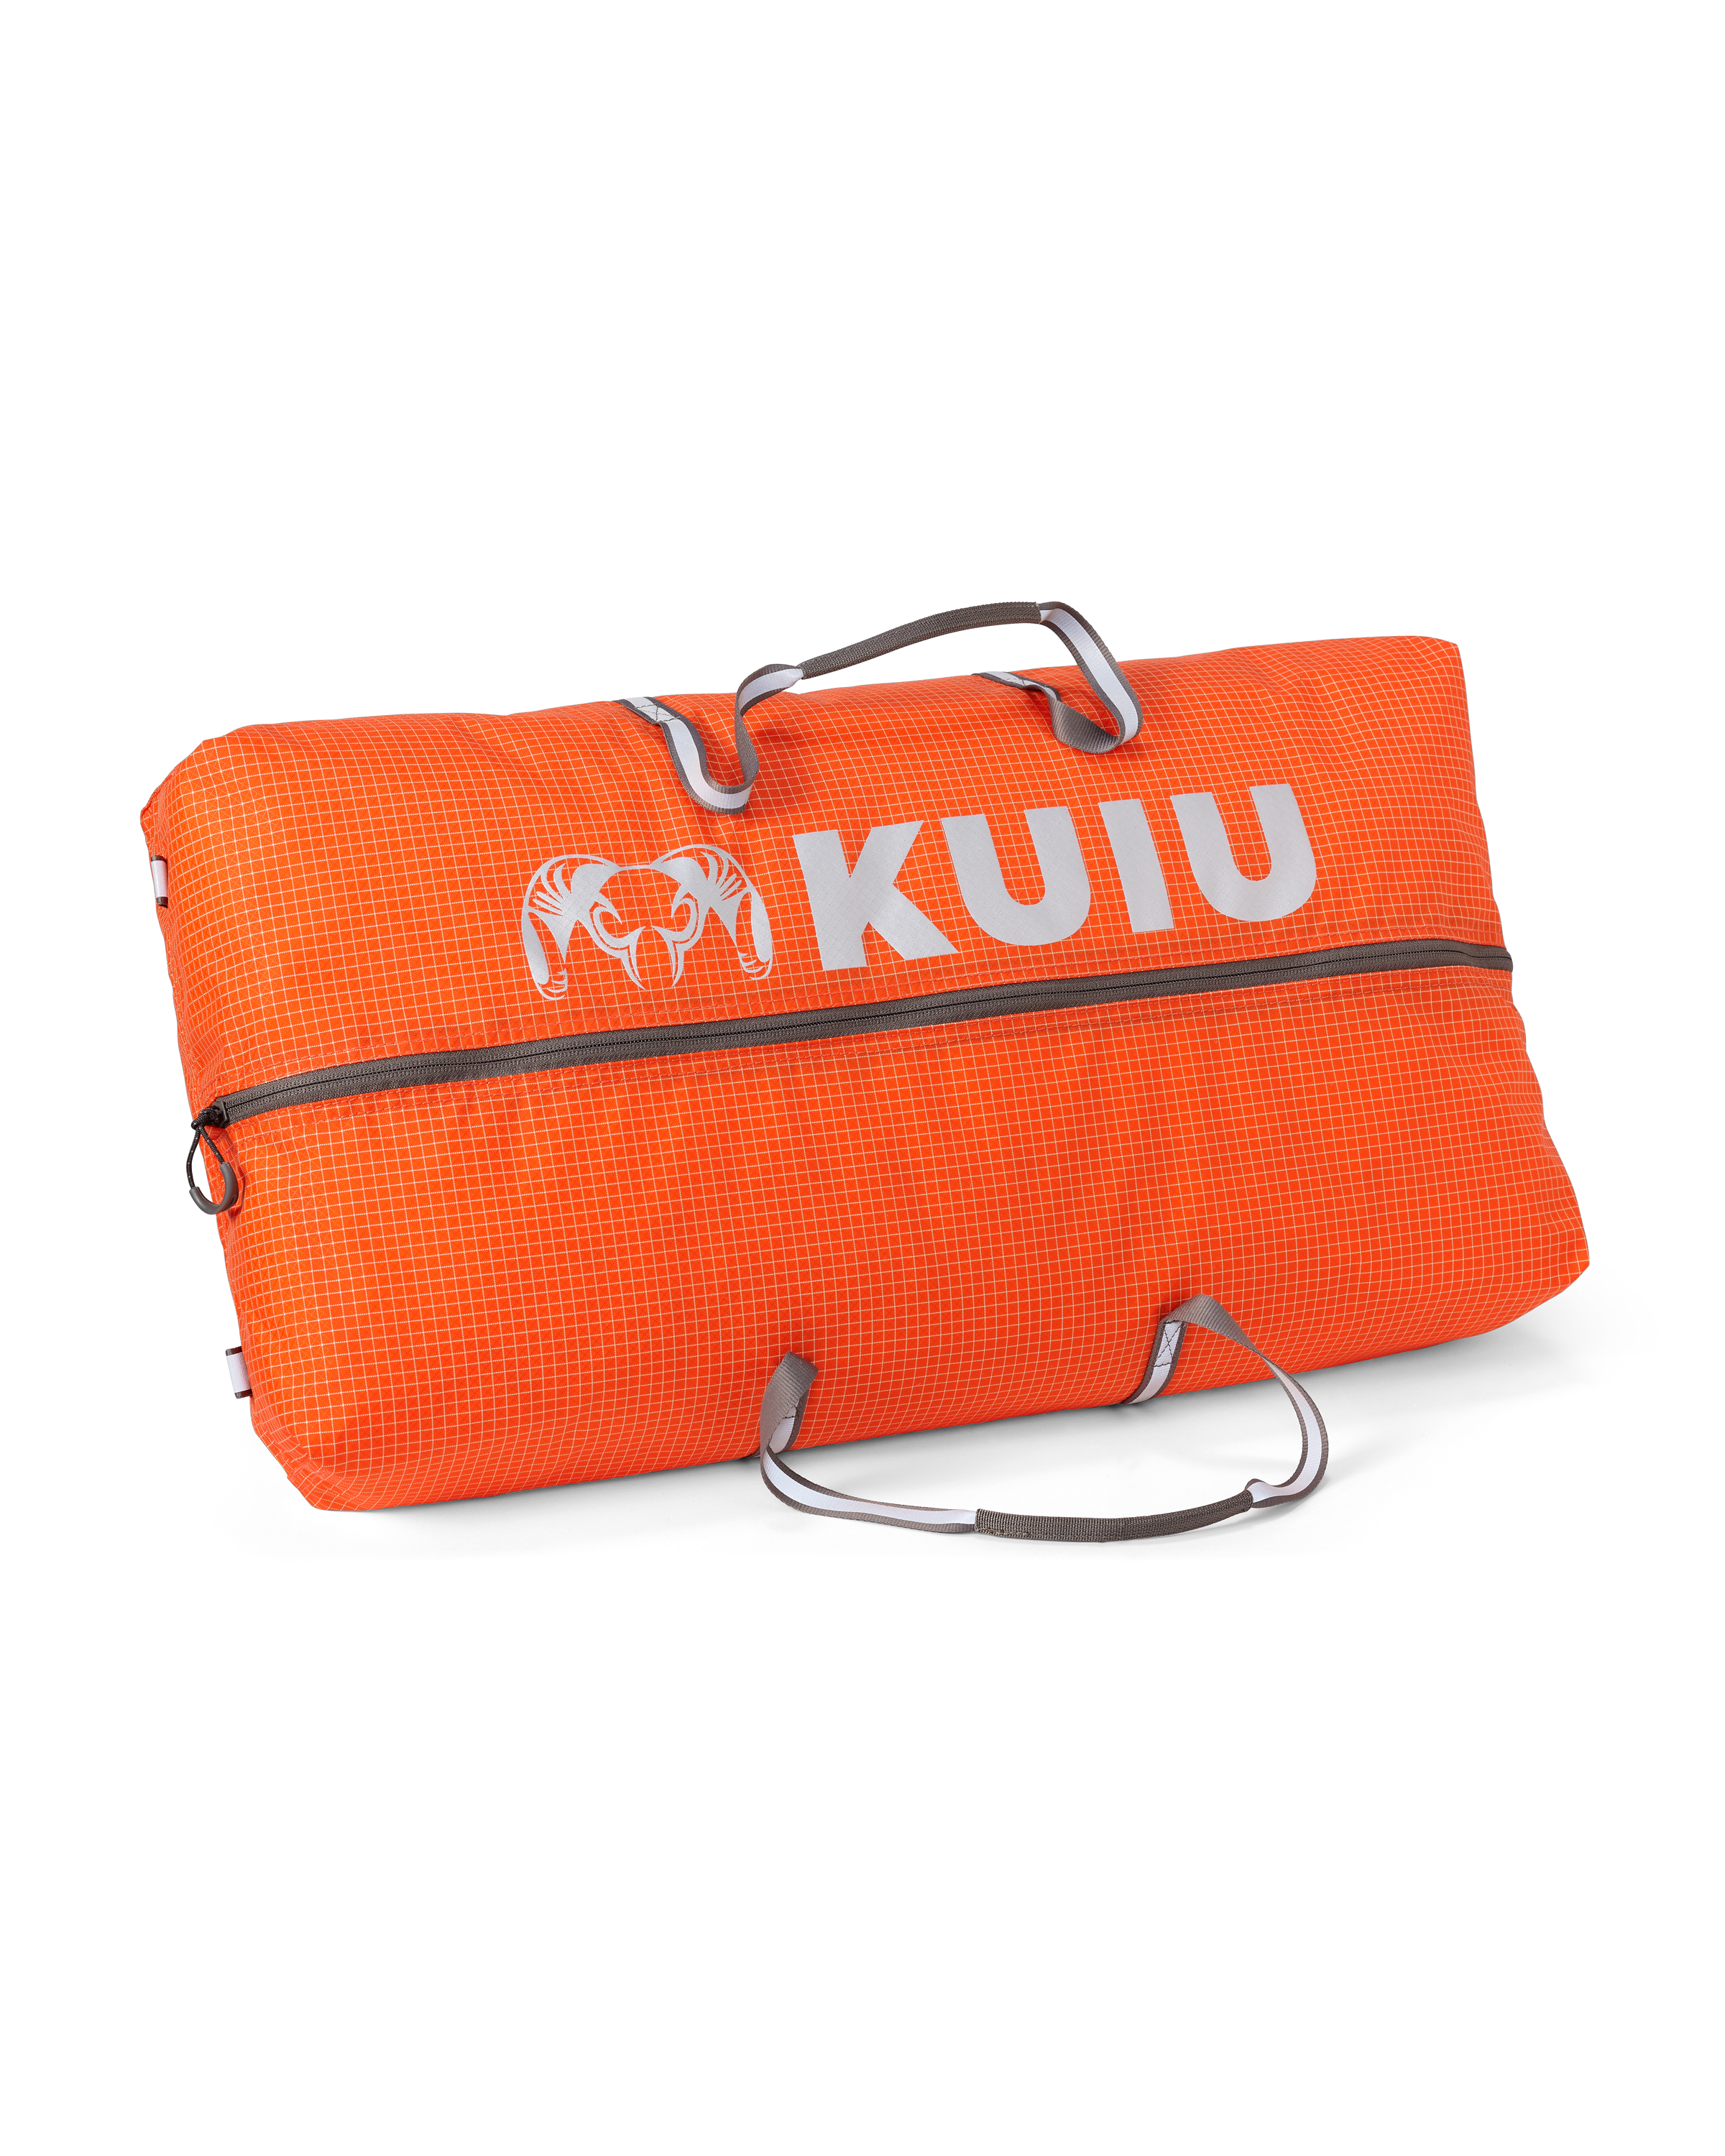 KUIU Extreema Bag in Orange | Size Large